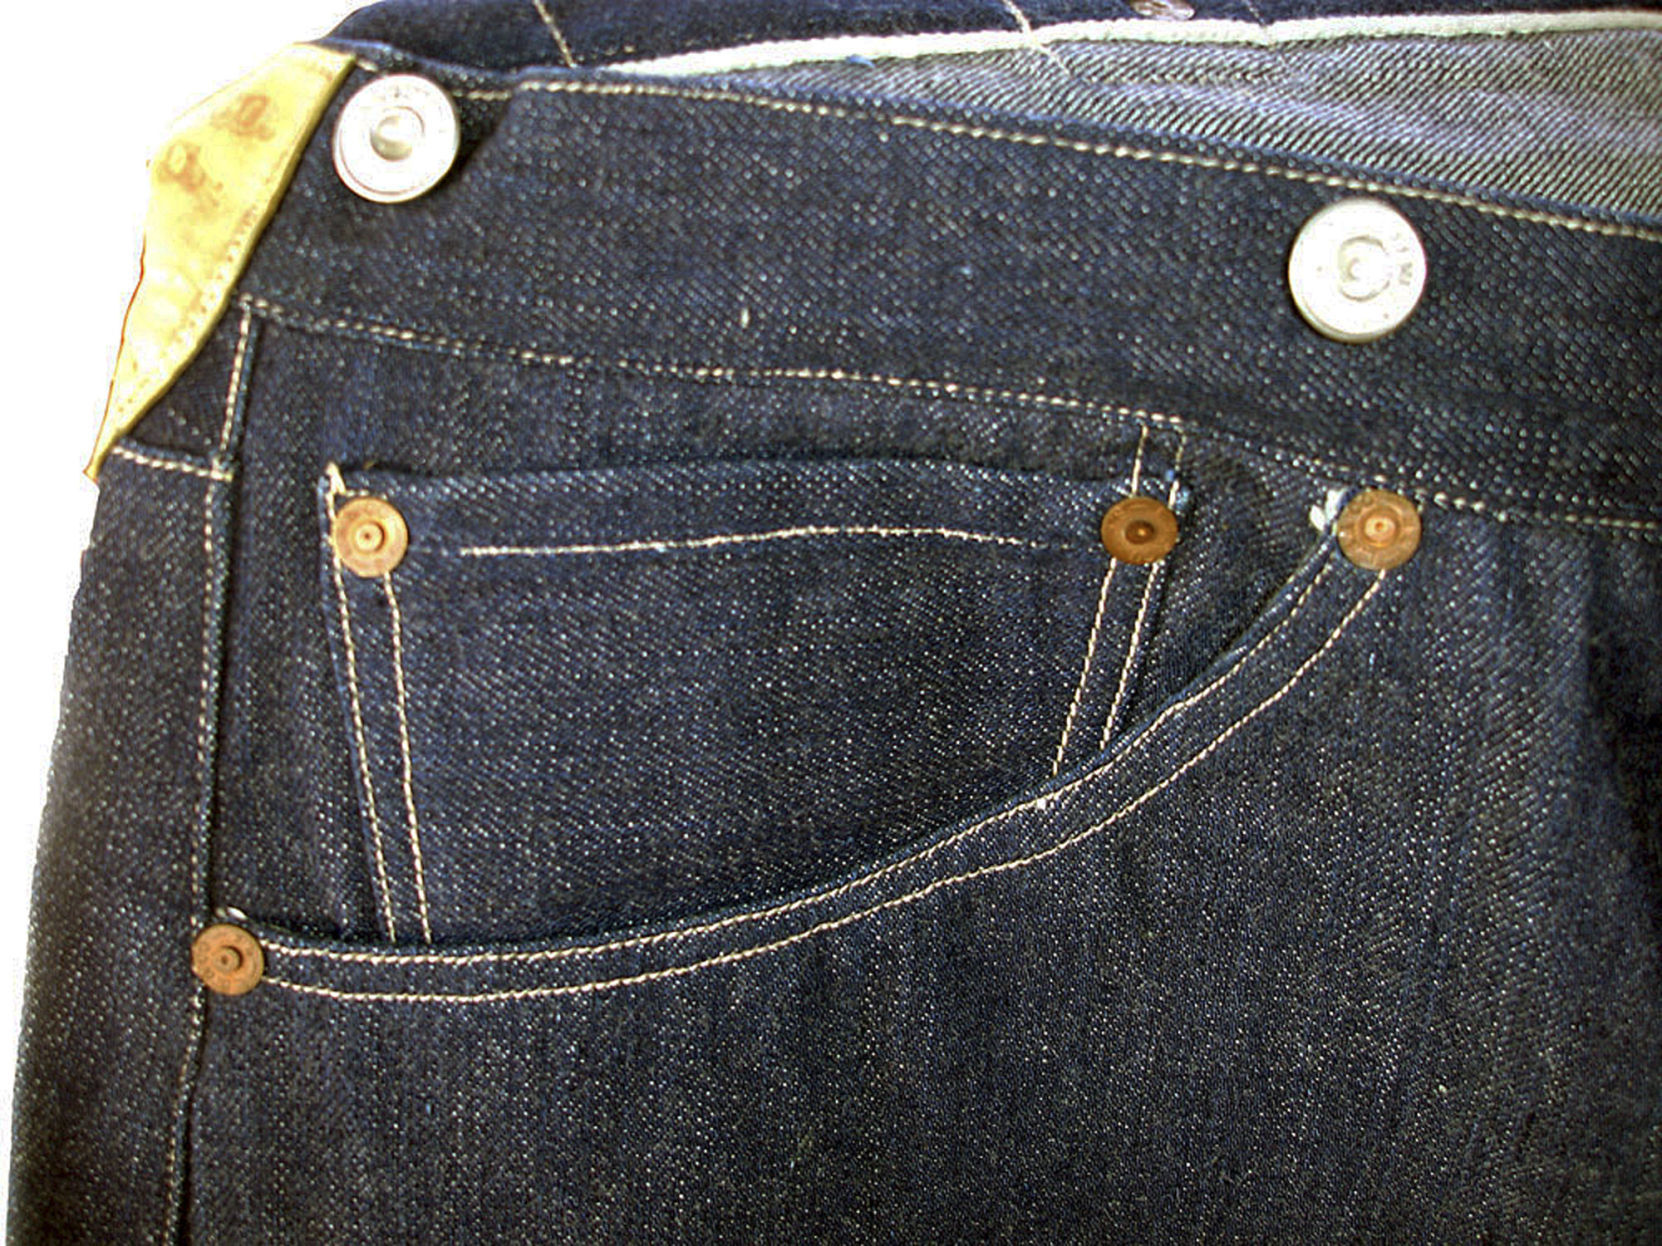 32 Jeans Sewing Patterns for Women, Men, Kids (2 FREE!)